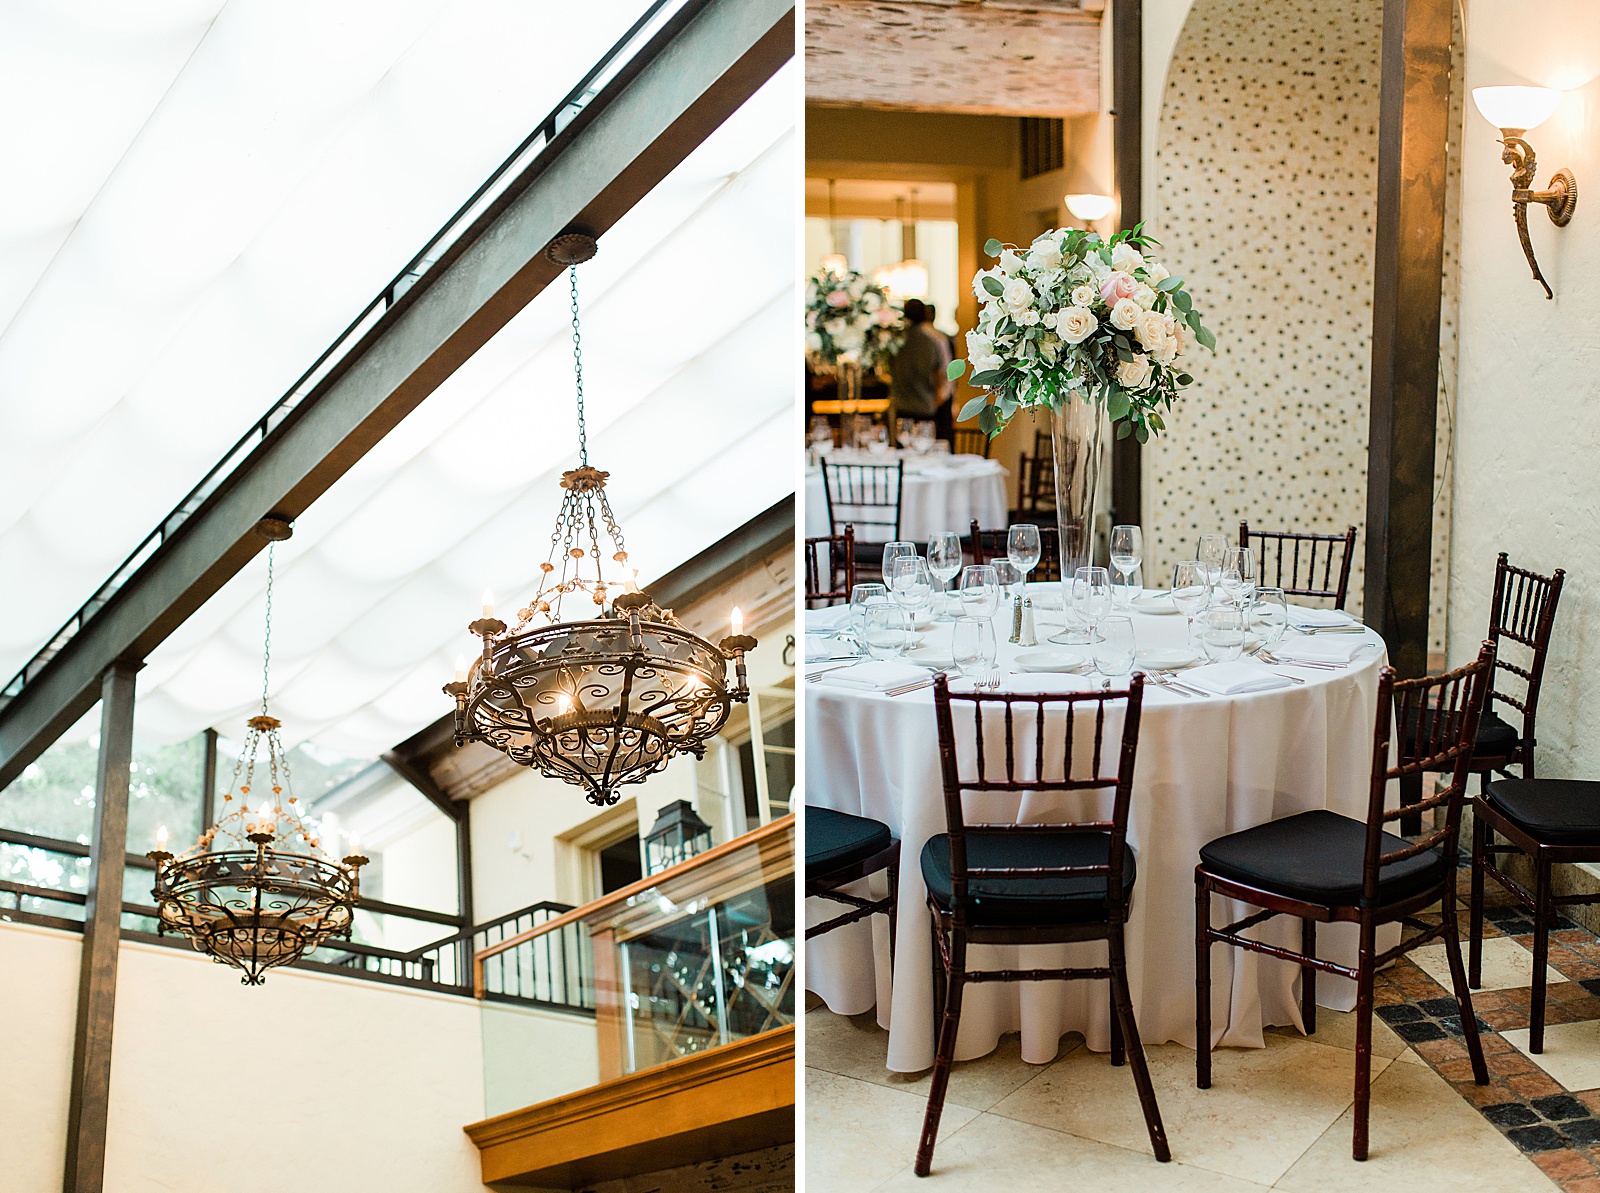 Modern Blush and Greenery Reception at The Addison designed by NYC Wedding Planner, Poppy + Lynn